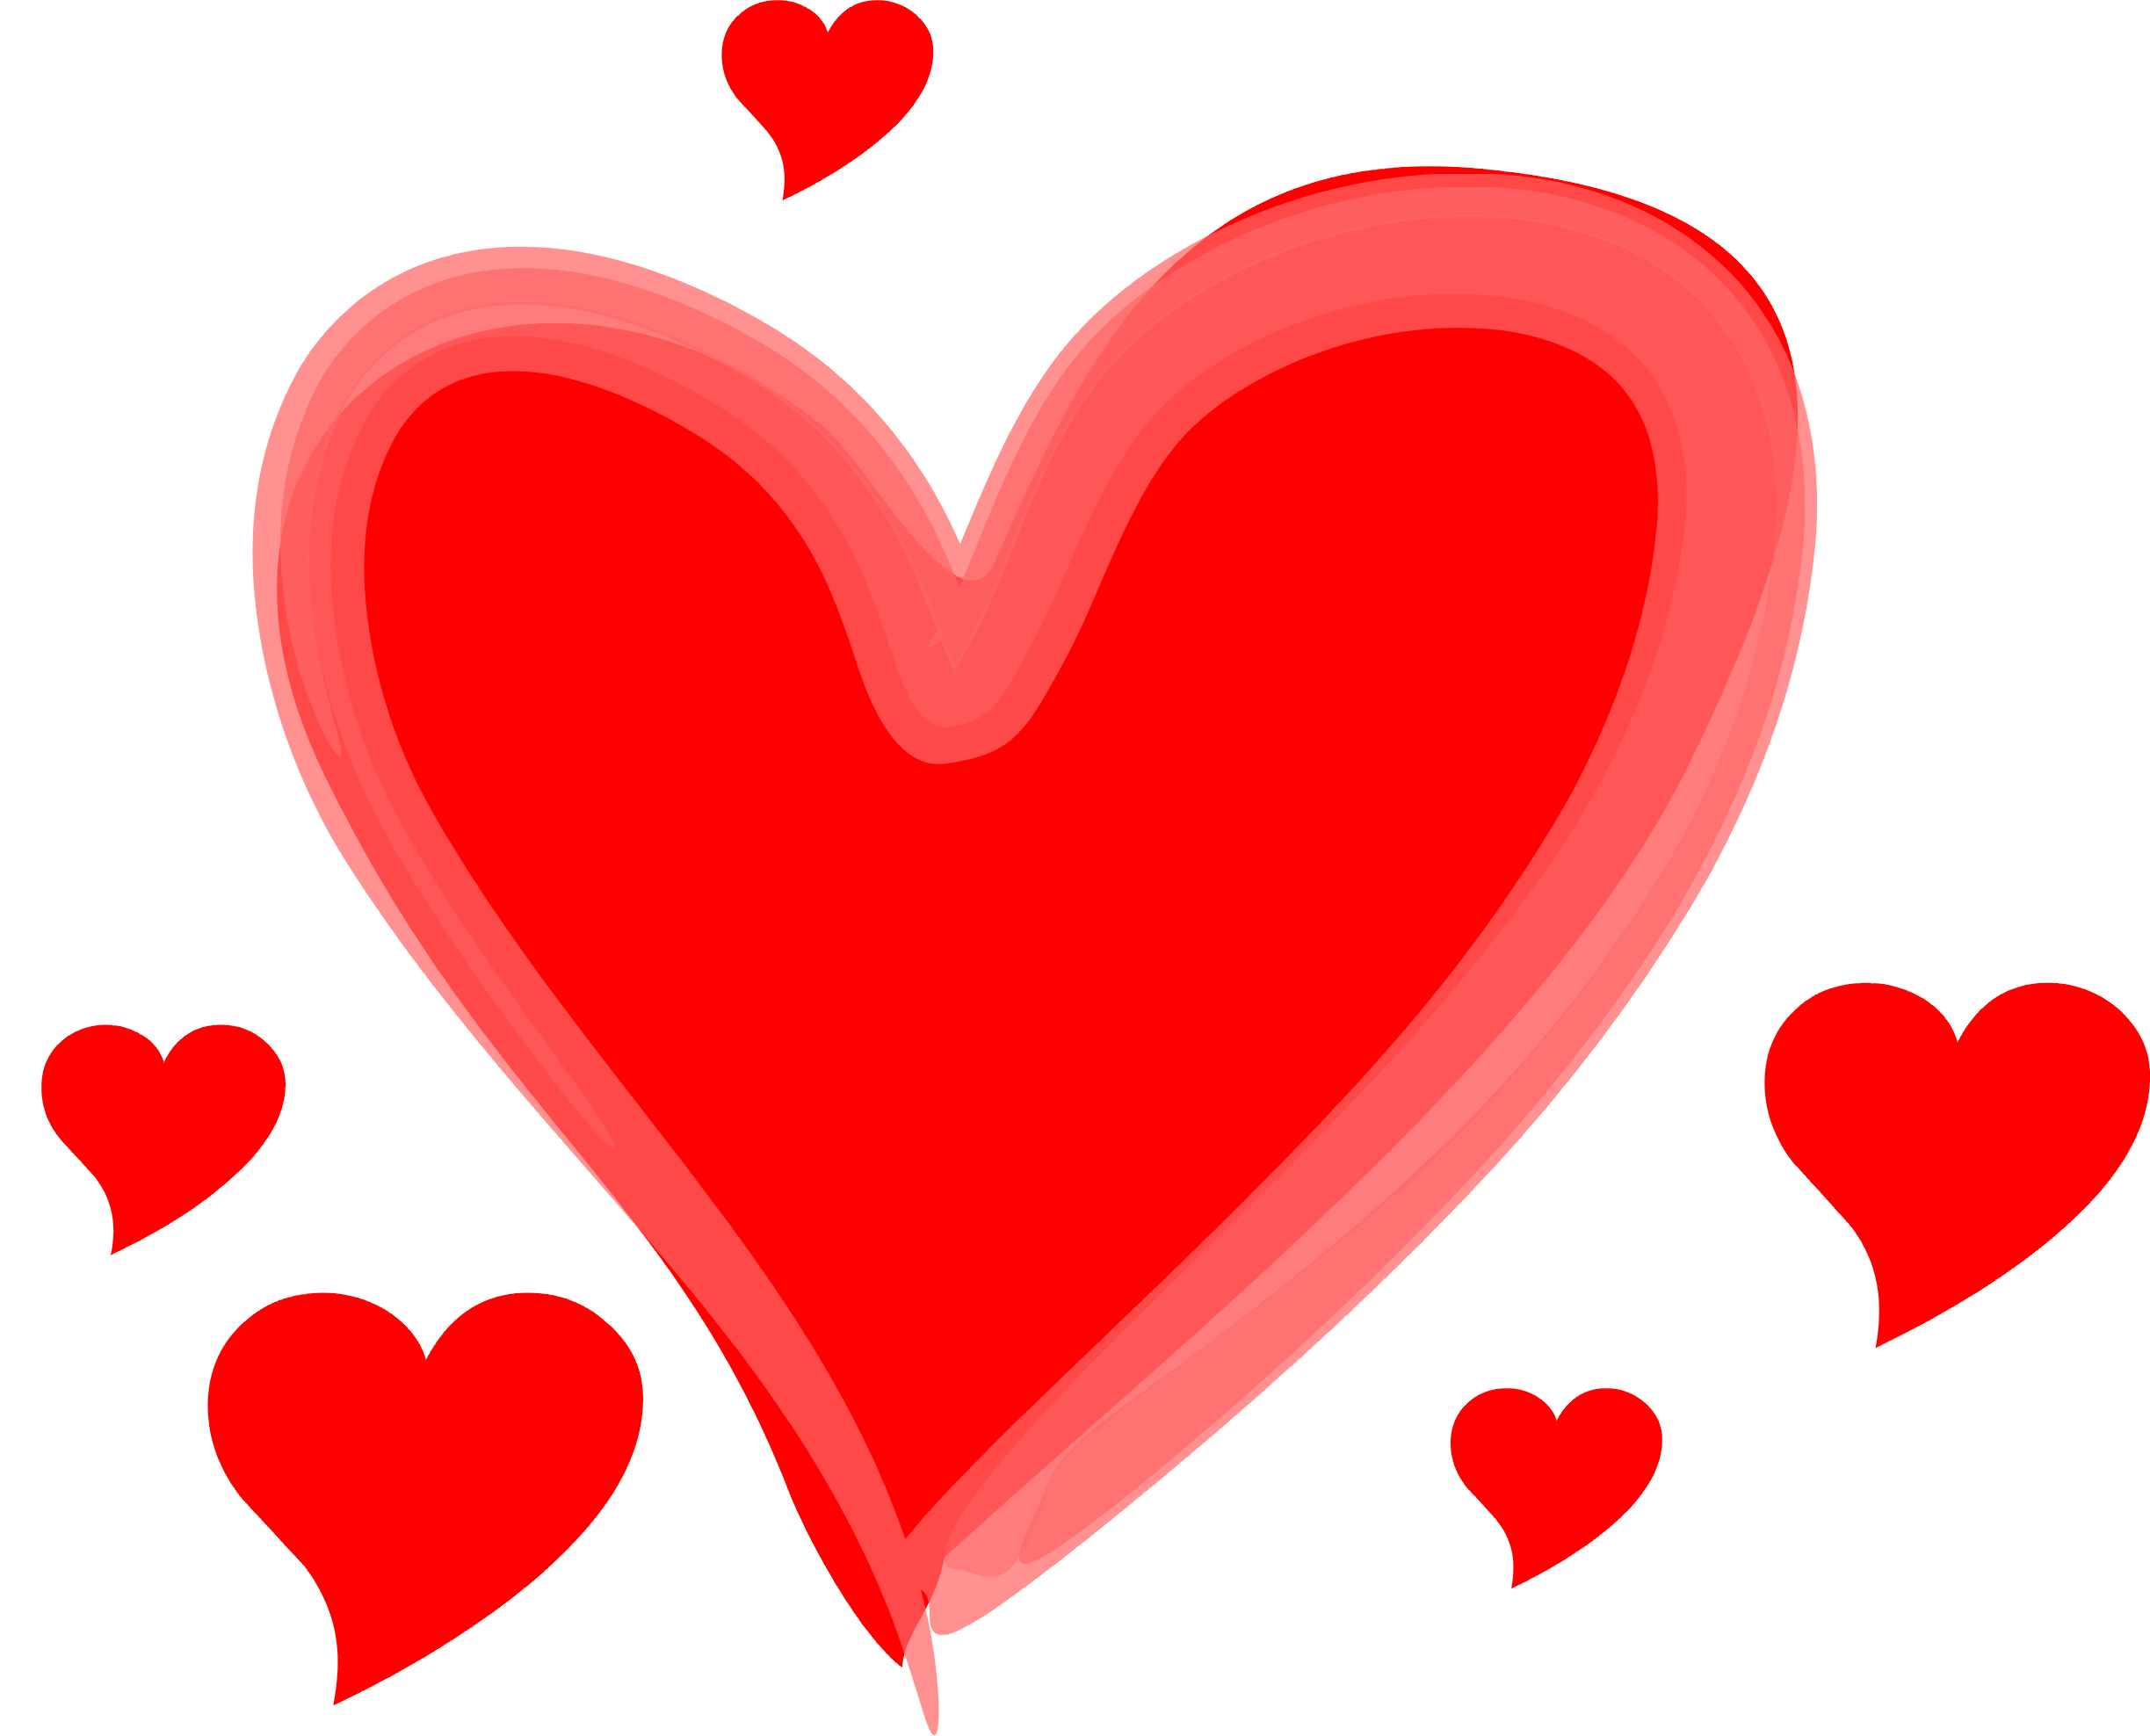 Love Heart Background Image - Love Hearts - HD Wallpaper 